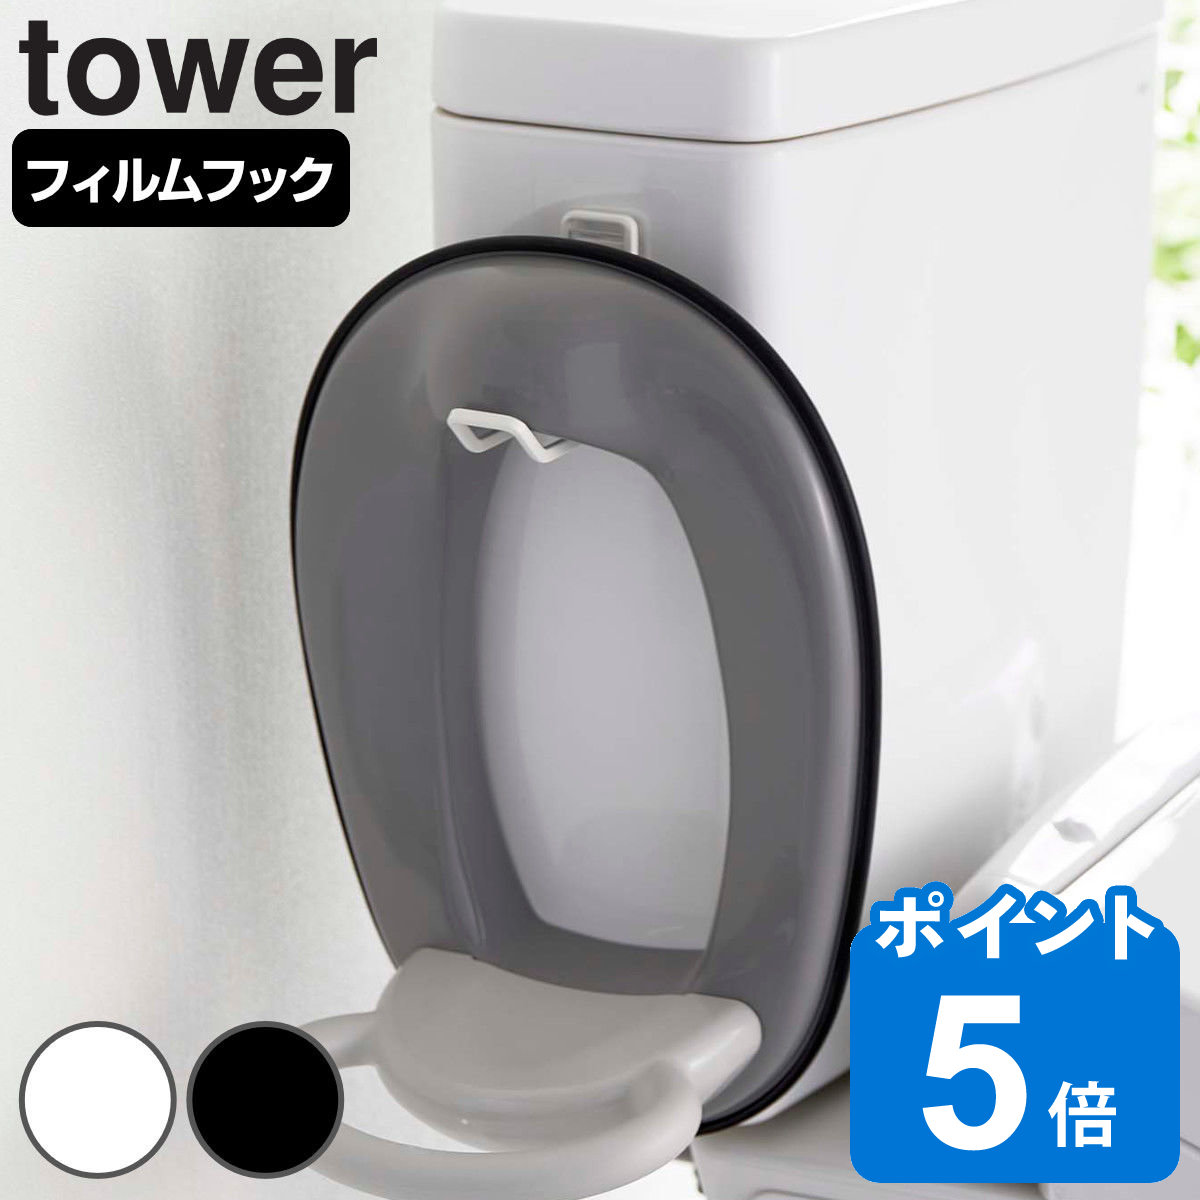 tower フィルムフック トイレ用品収納フック タワー